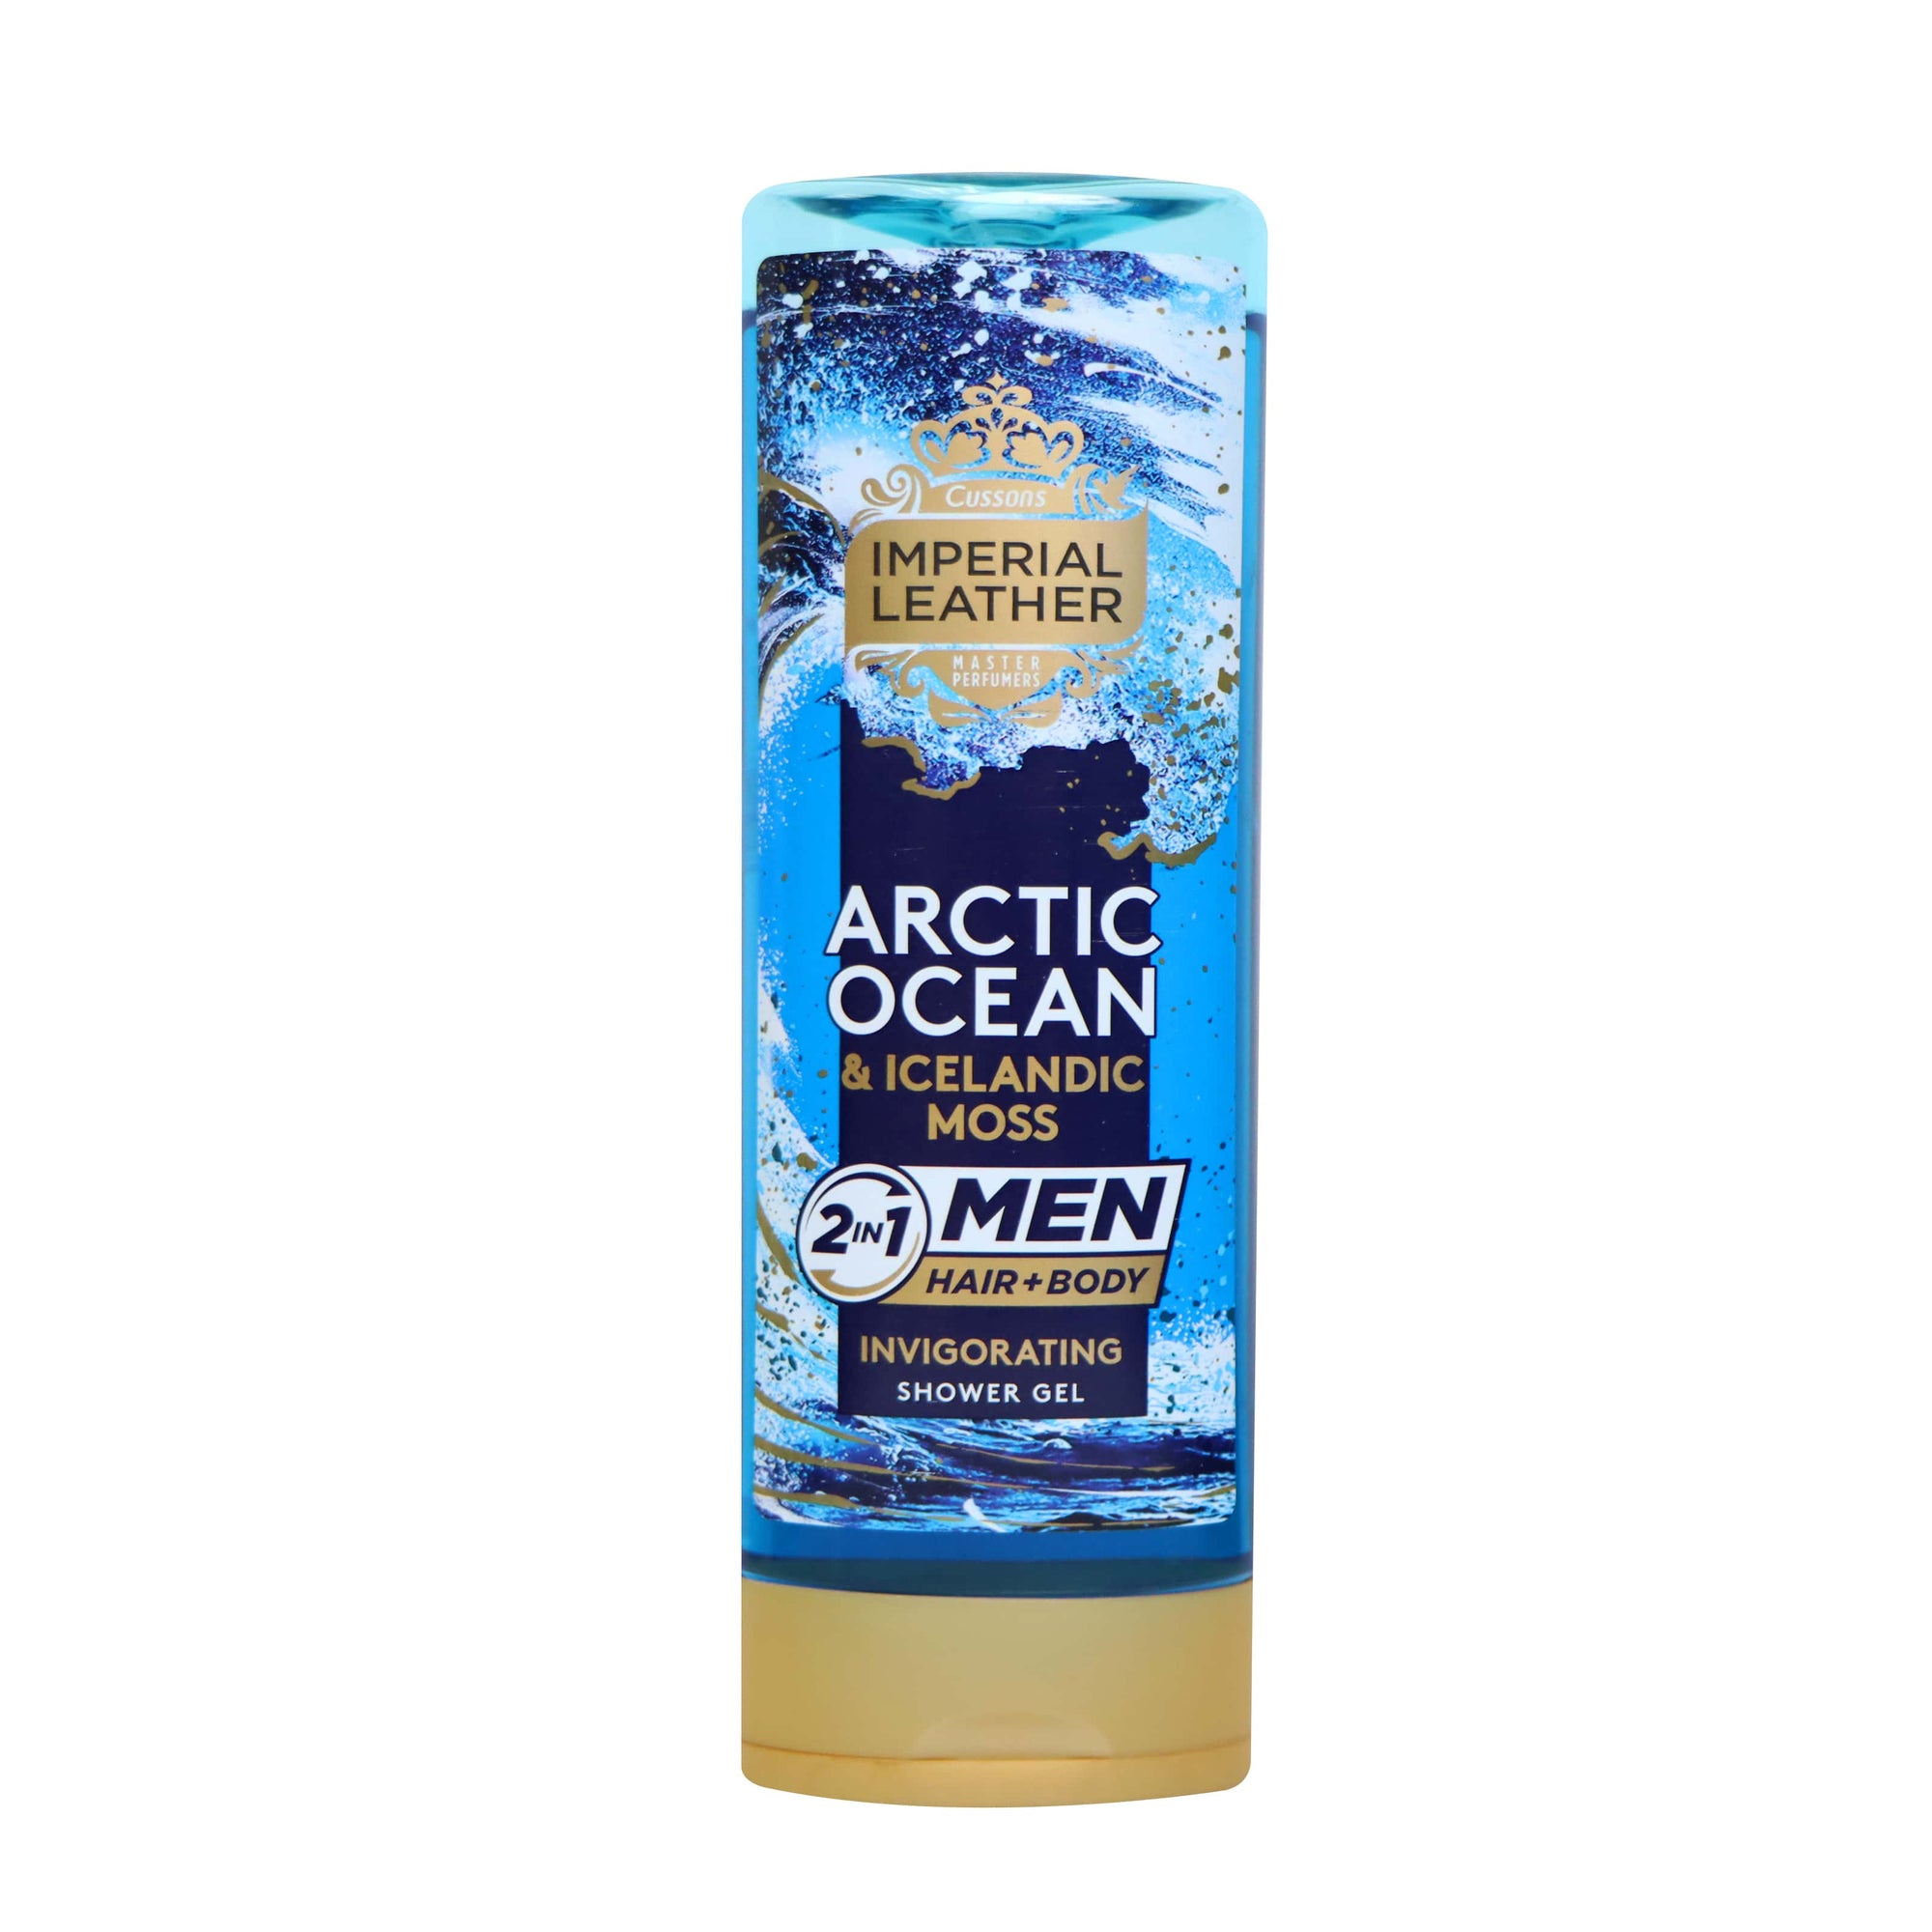 [Cussons] Imperial Leather Arctic Ocean 2 in 1 Men Shower Gel 500ml